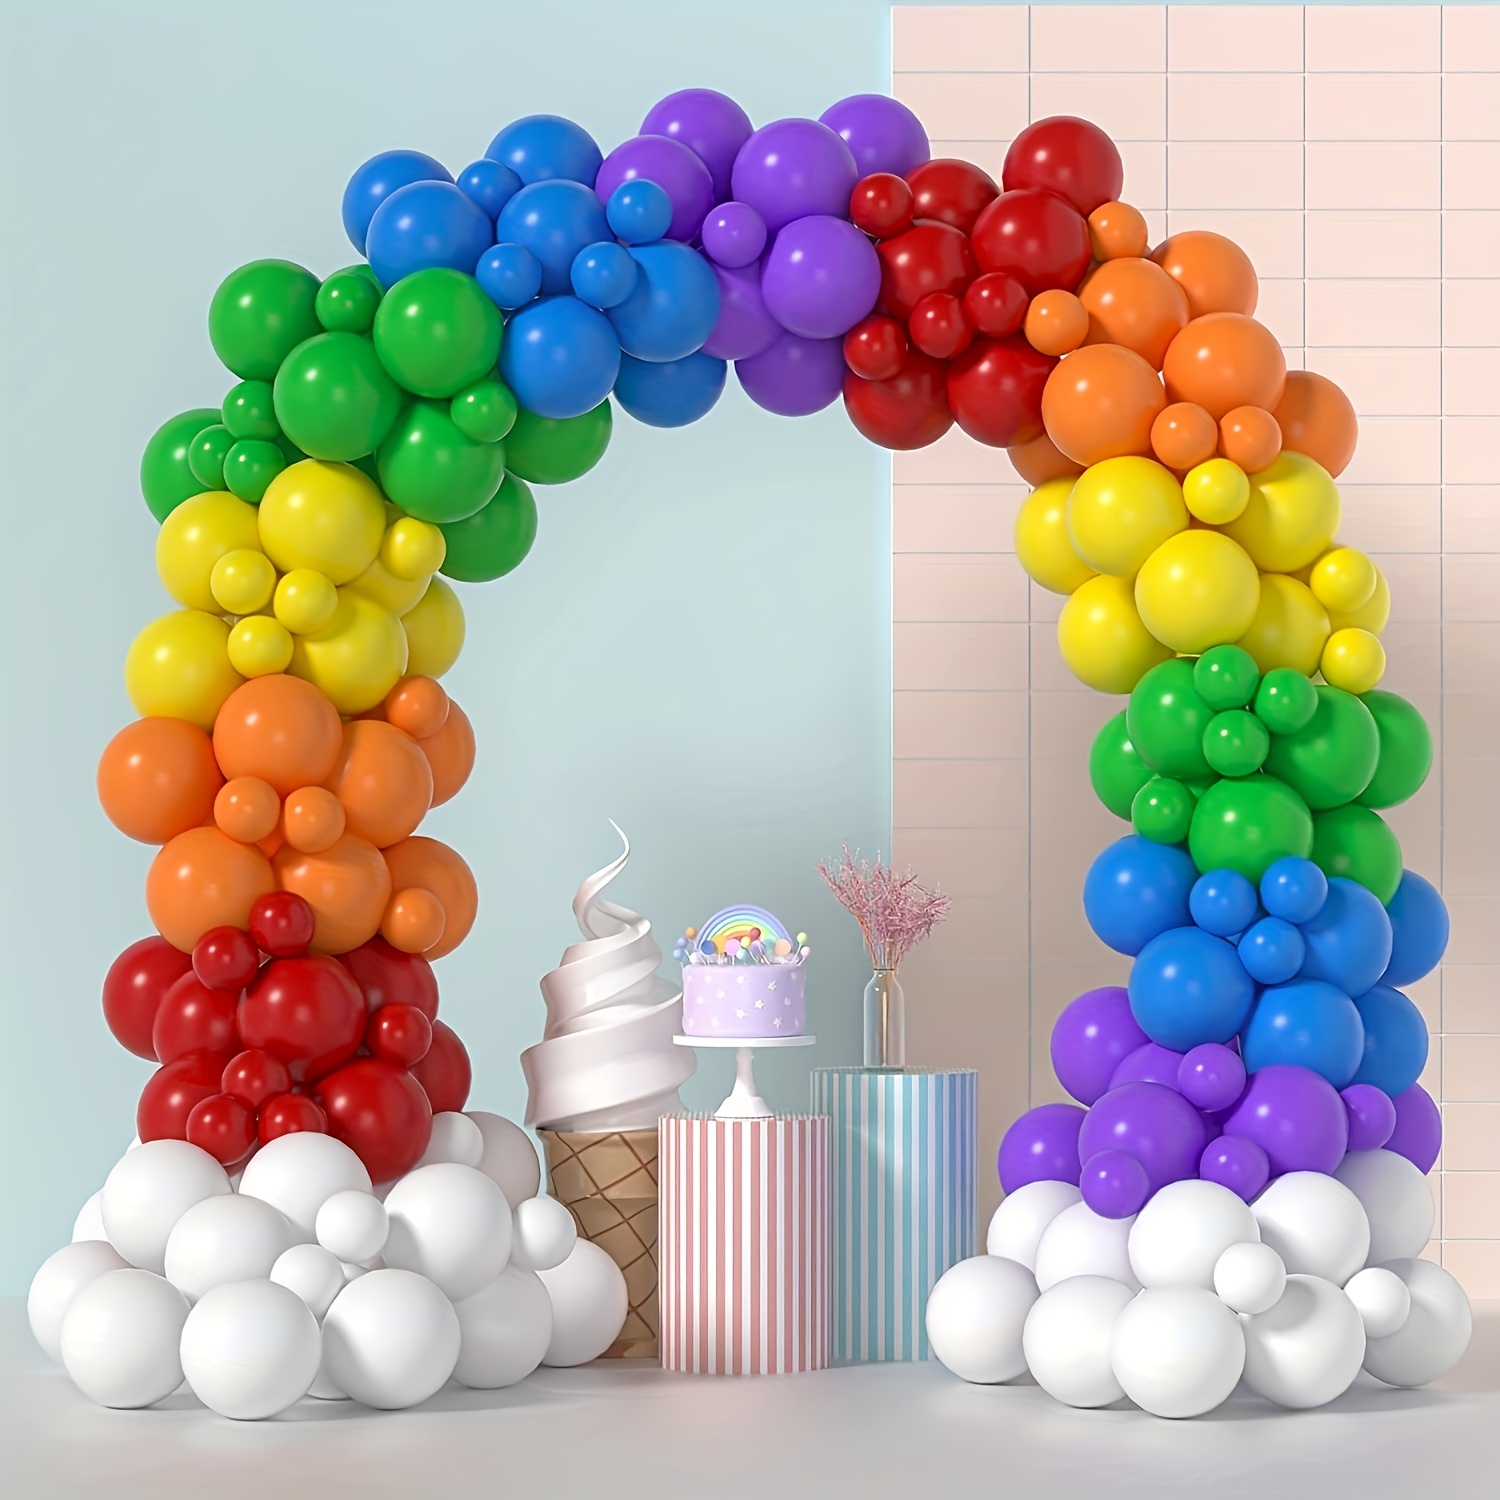 

175 Pcs Rainbow Balloons Arch Kit - Create A Colorful & Festive Rainbow Party Decoration!